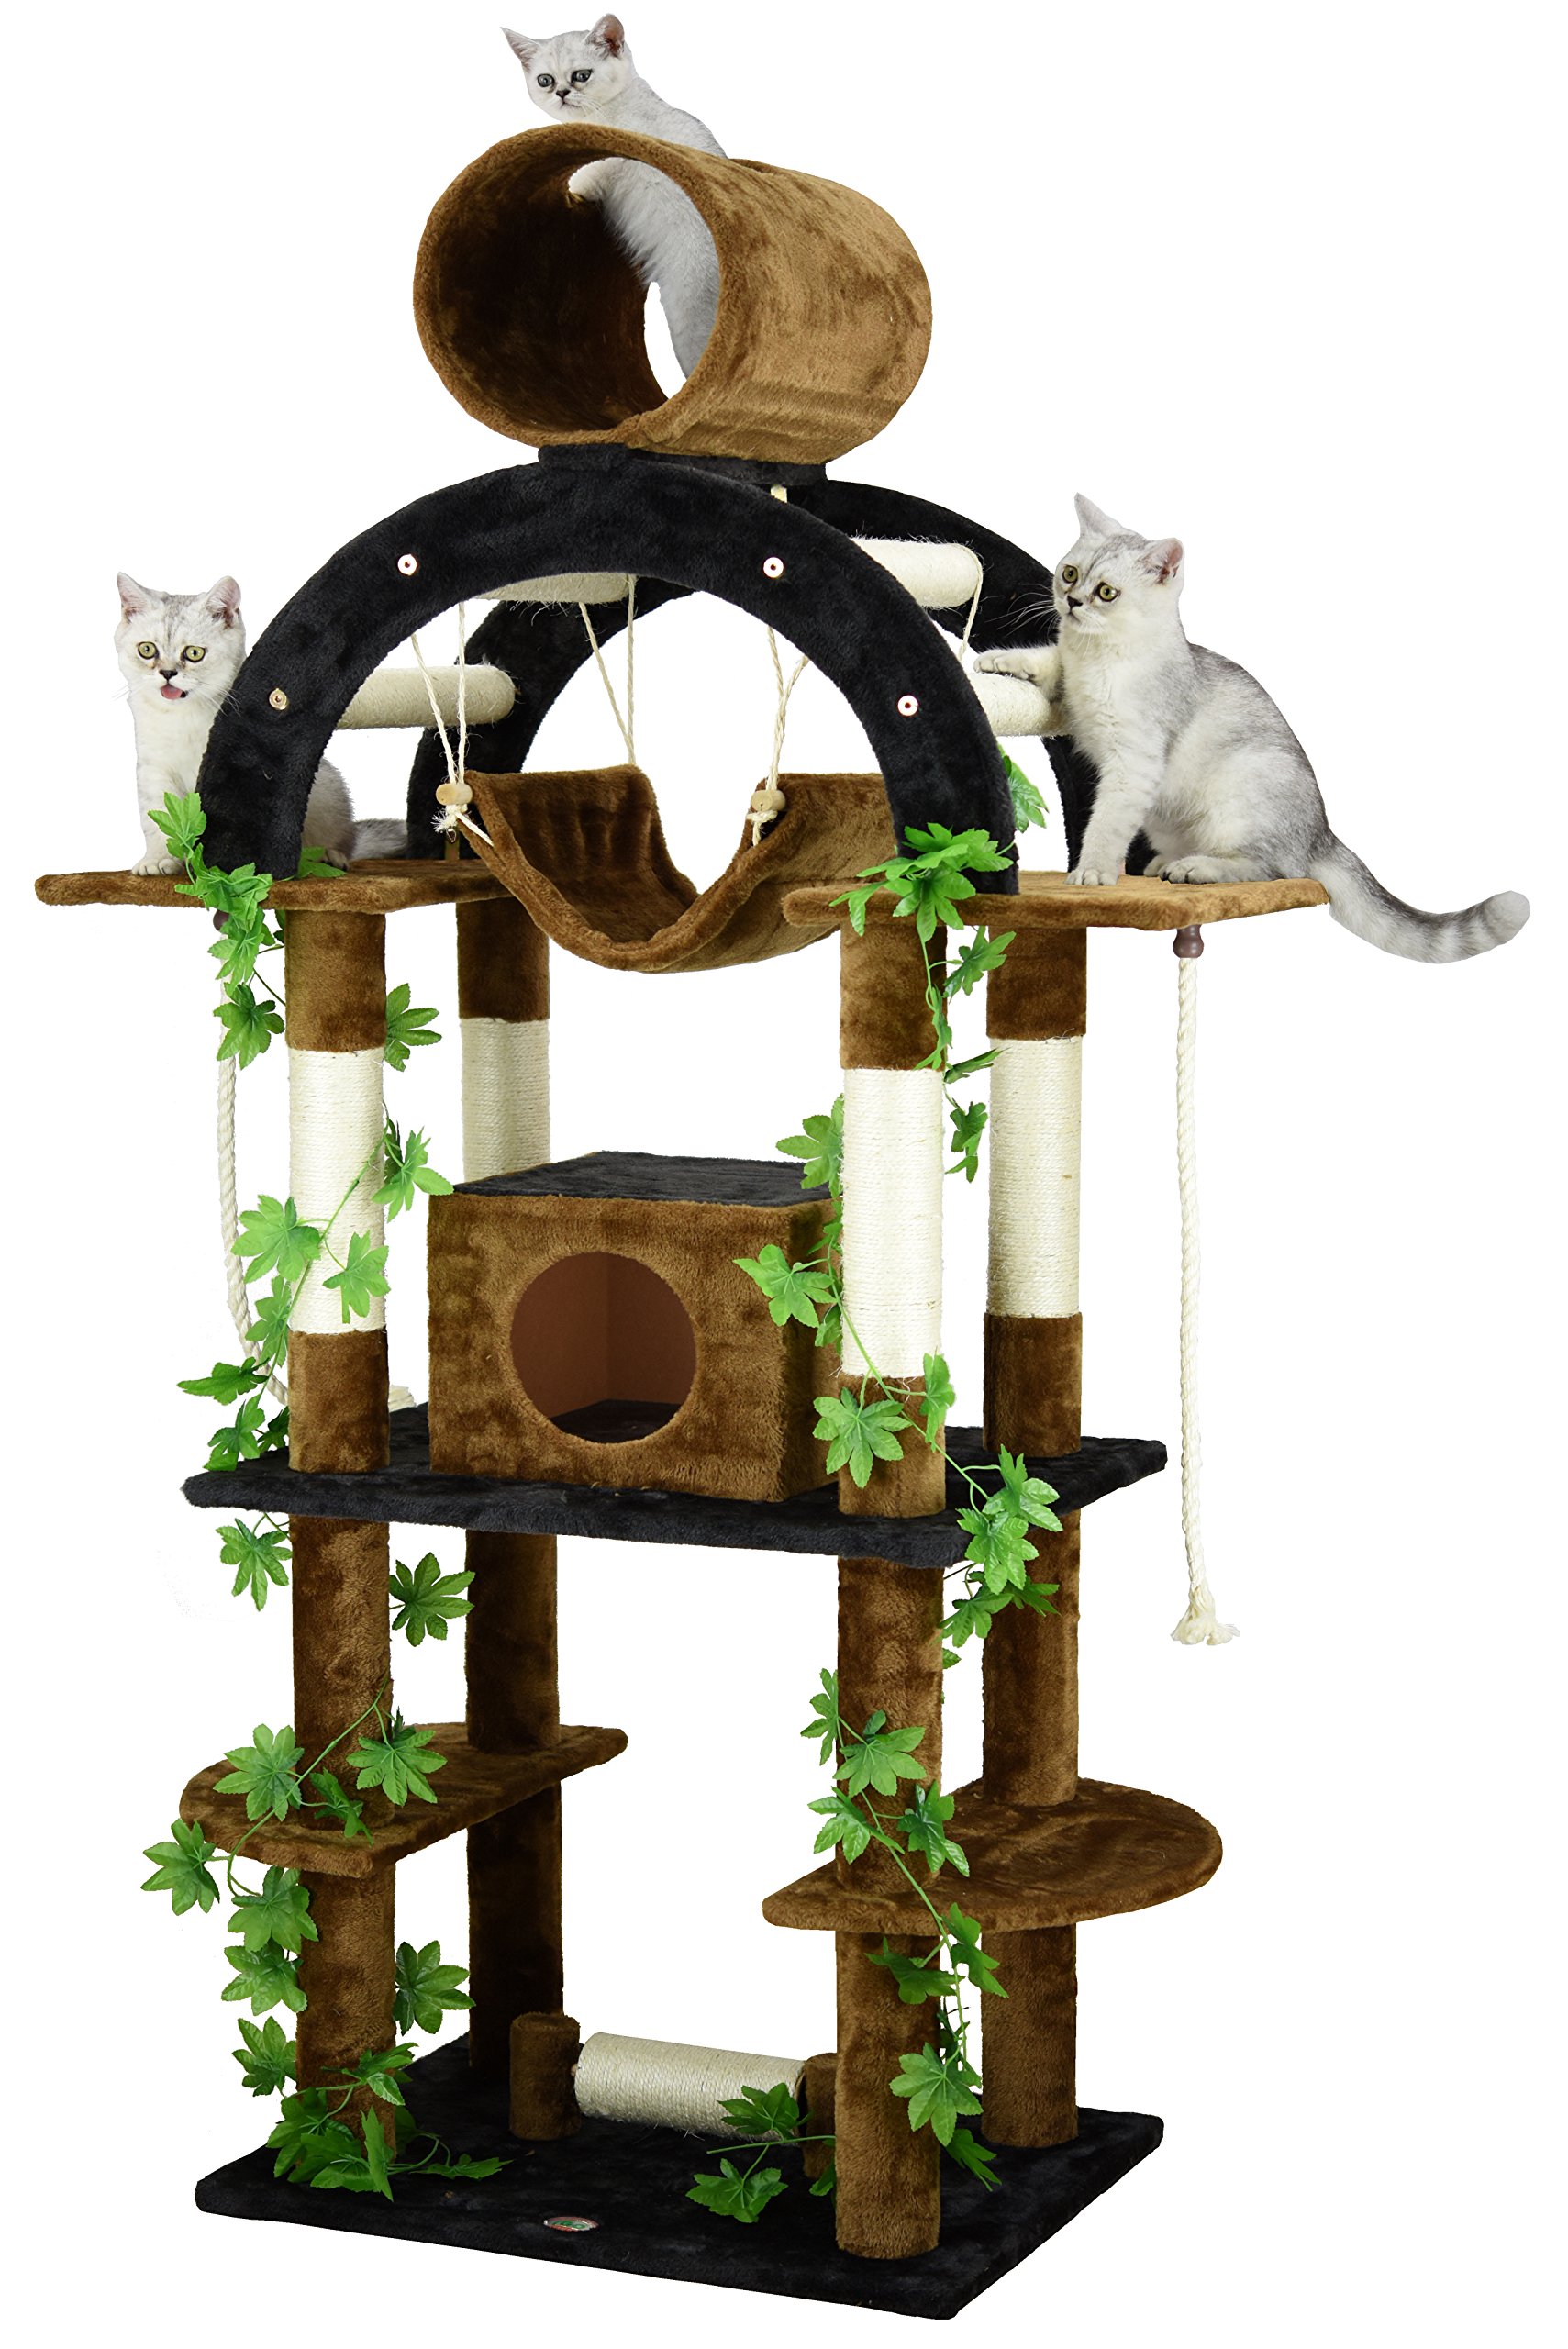 Go Pet Club F2096 Luxury Climber Cat Tree, 71